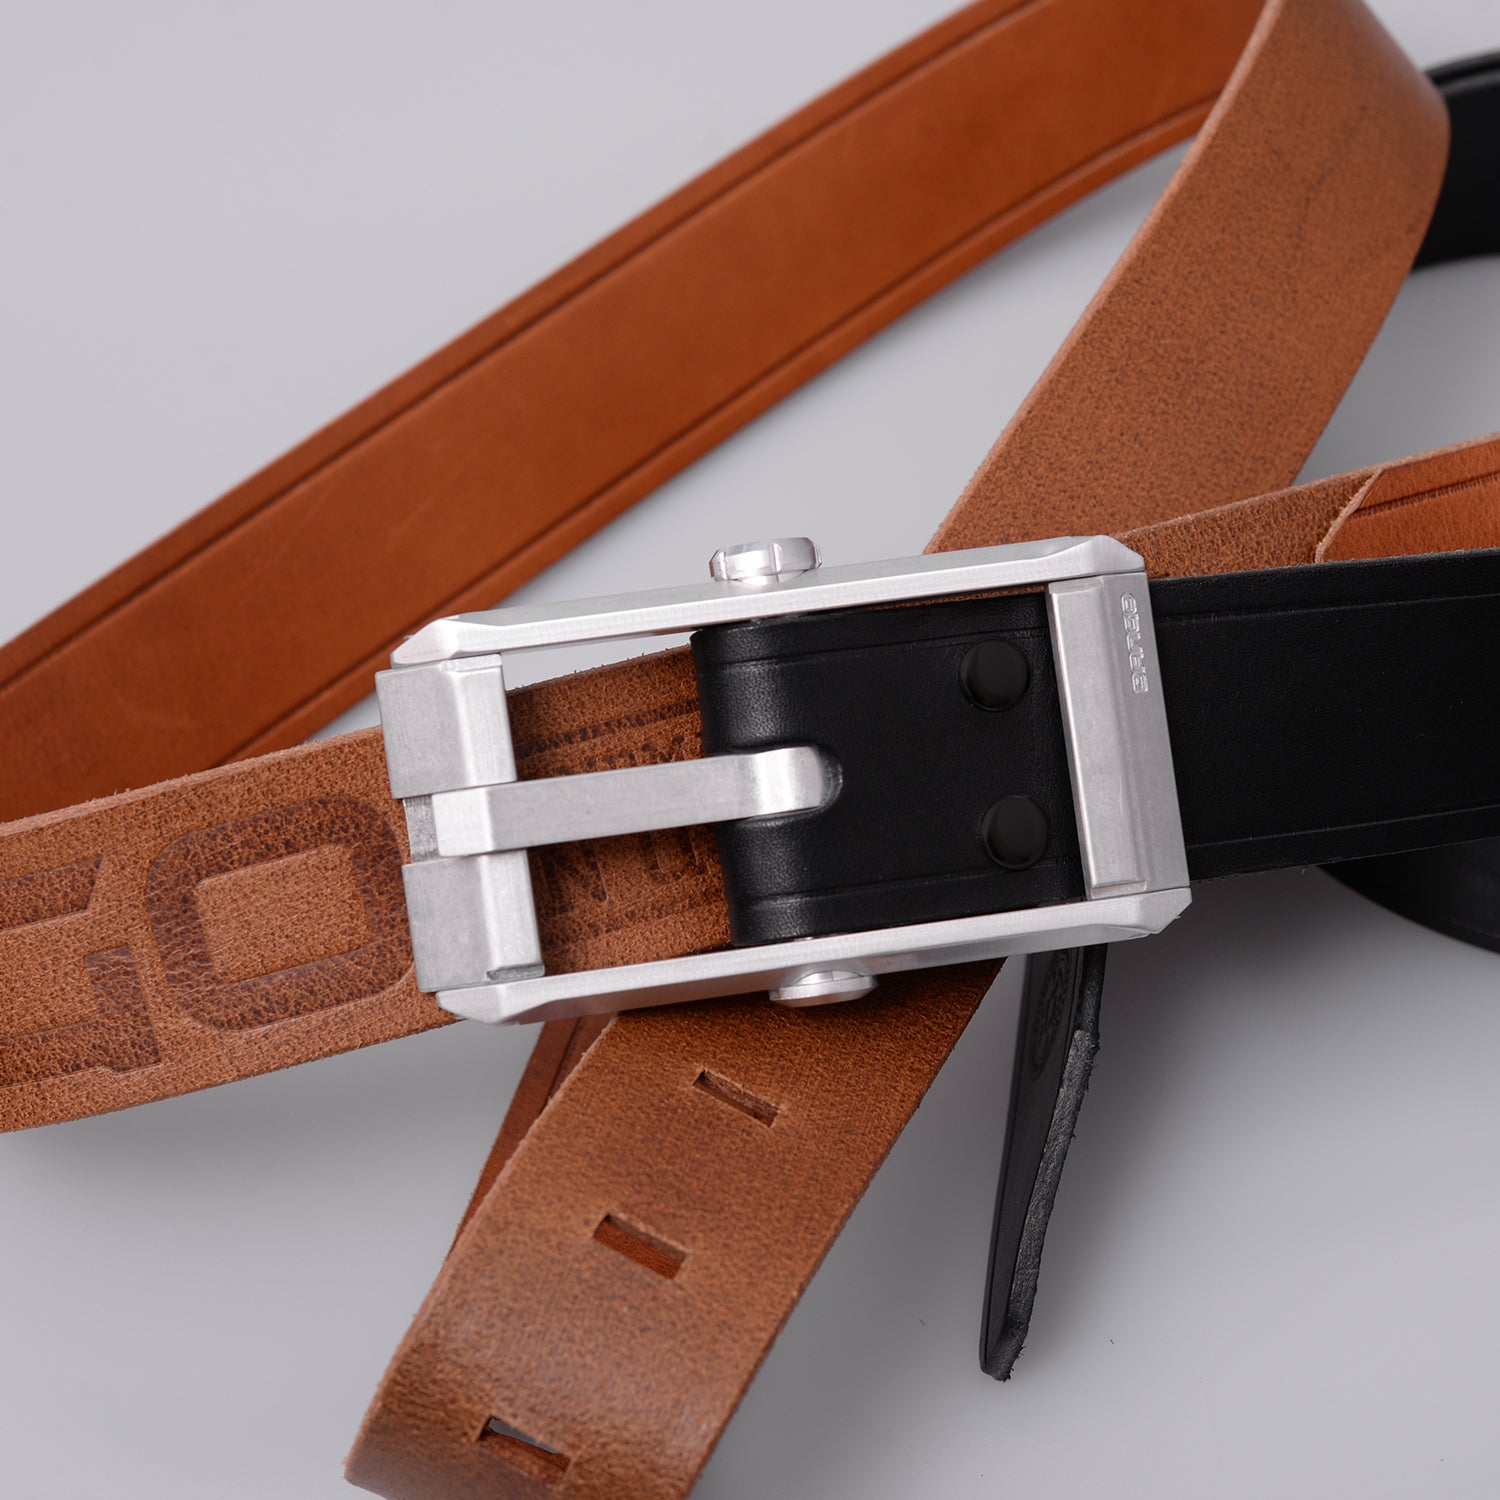 JASGOOD Belt Accessories Leather Loop Keeper, Straps Holder Retainer Band  for 1.3(33mm)/1.1(28mm) Wide Belts/Straps